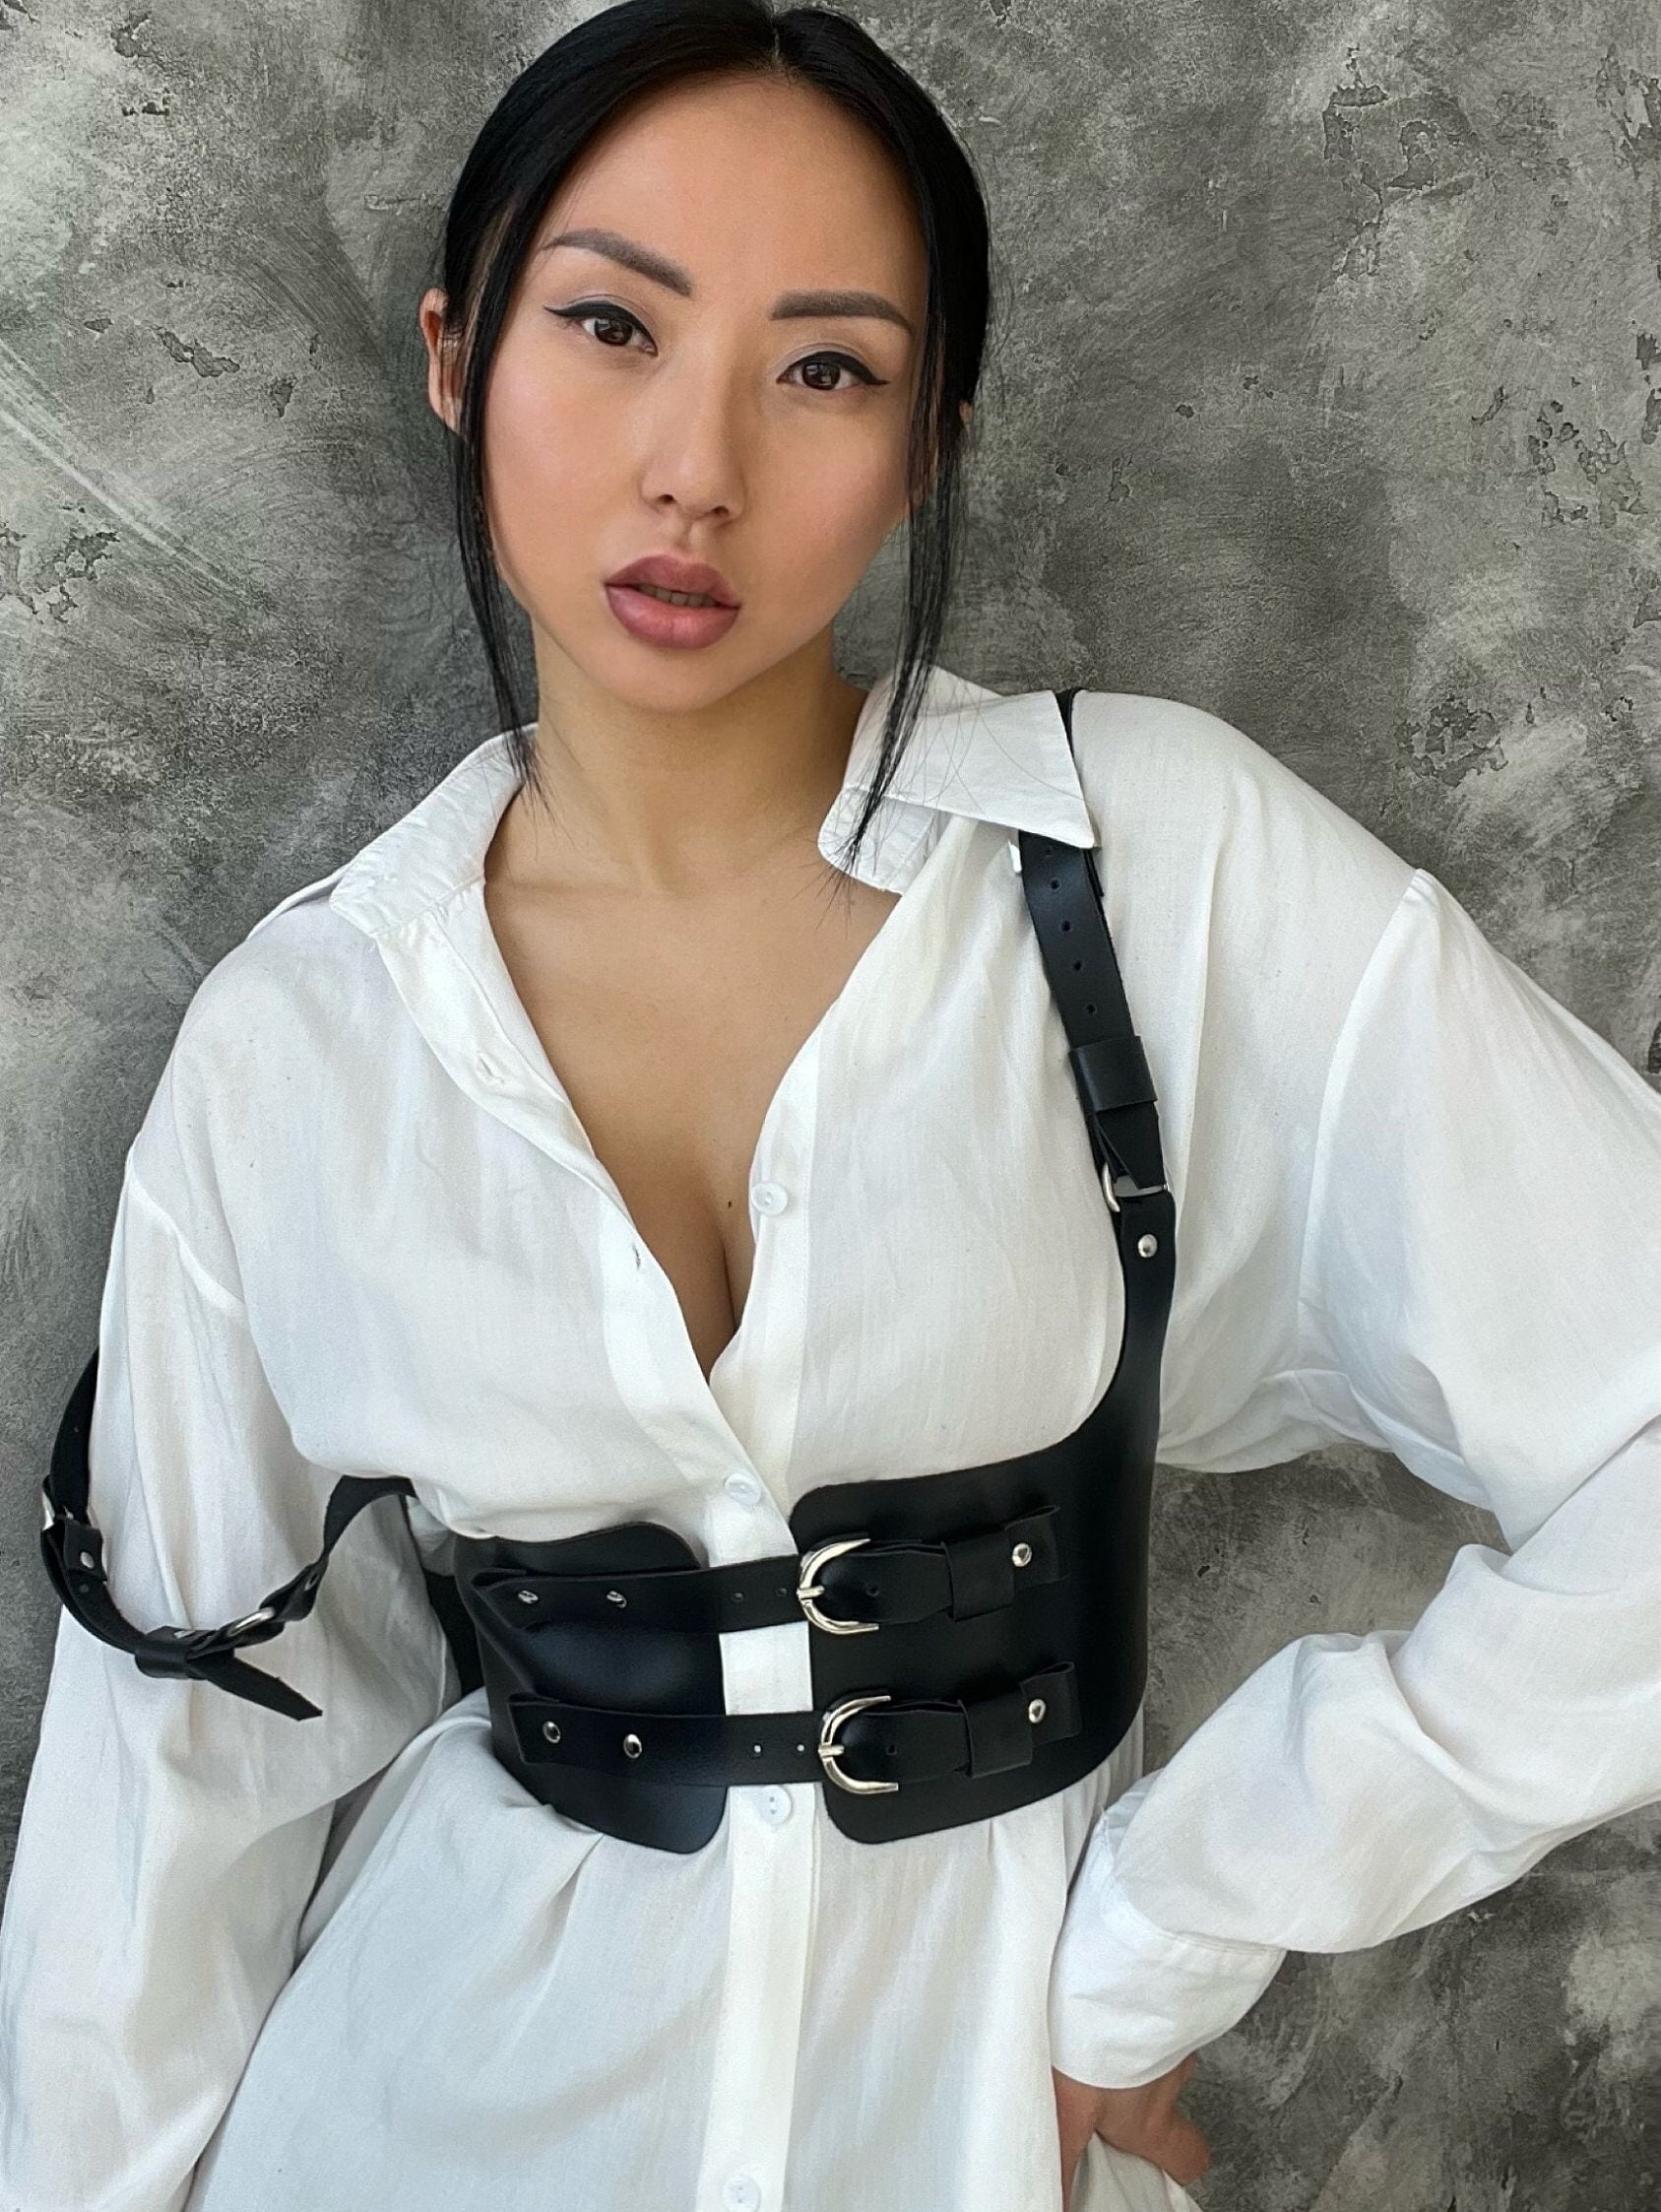 sexy women Leather harness belts Slim tight street strap body